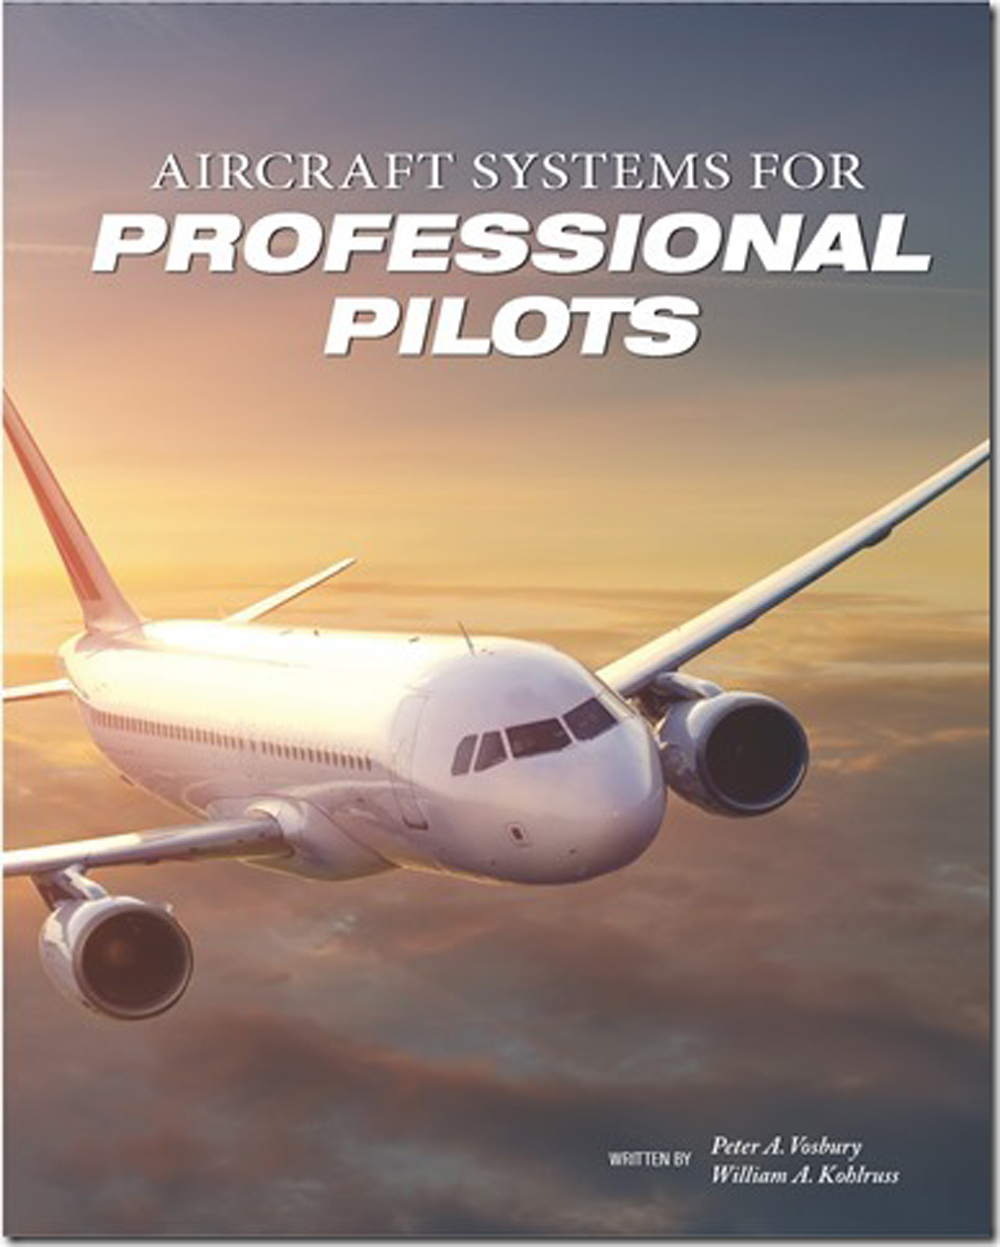 Multi Engine Pilot Flight Maneuvers: Step by Step Procedures Plus Profiles by Brad Deines